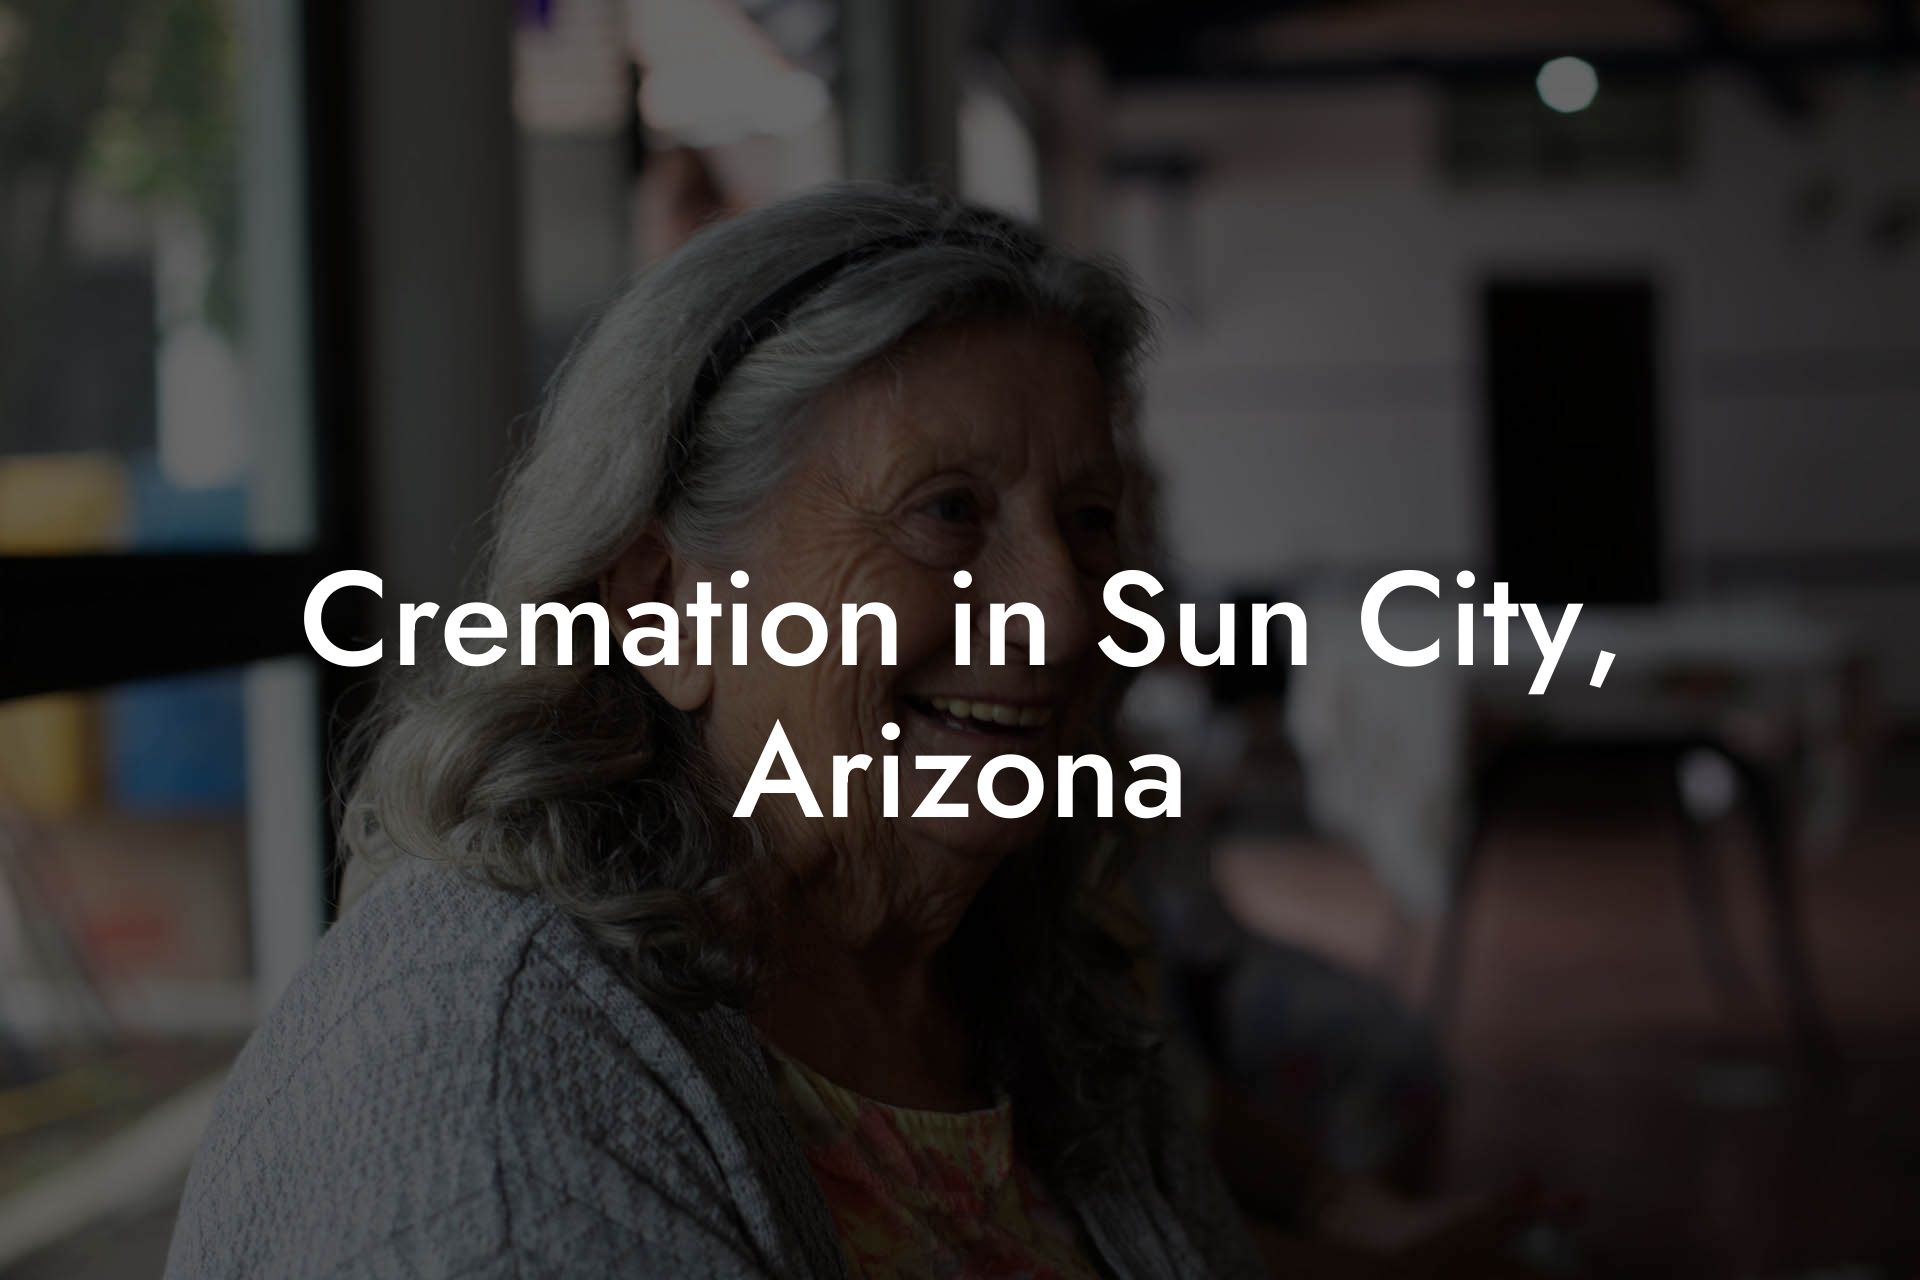 Cremation in Sun City, Arizona